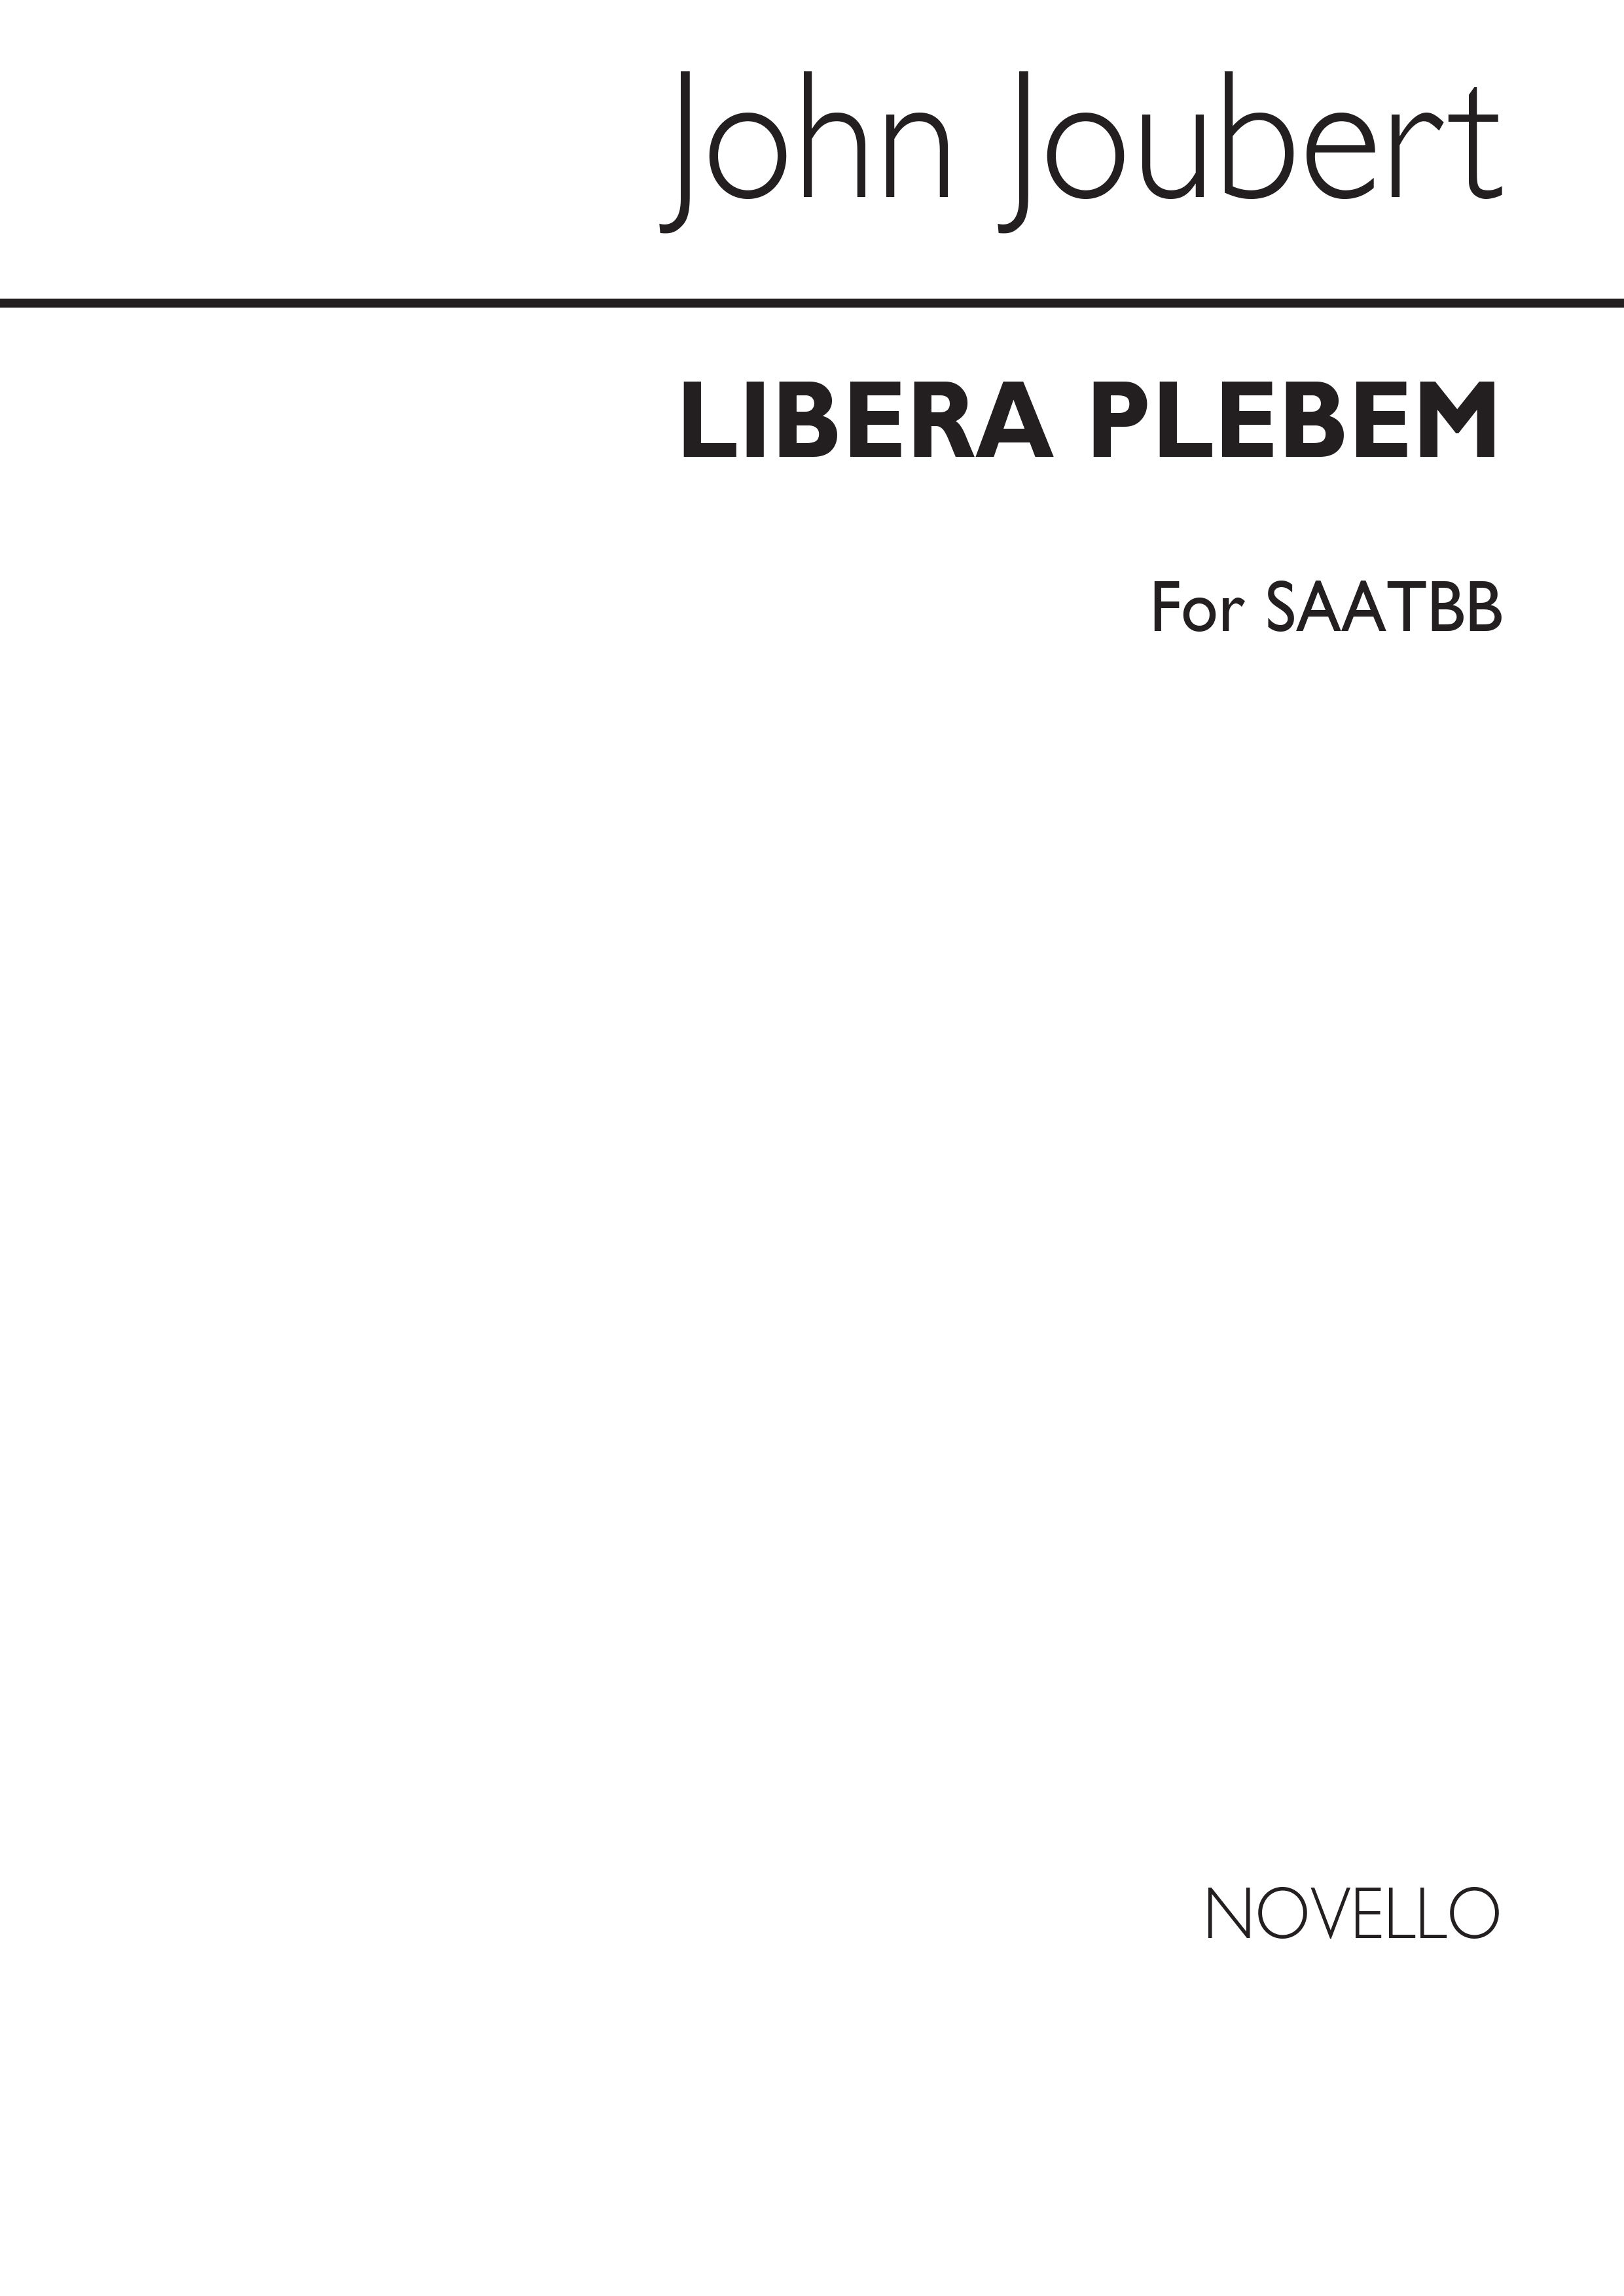 Joubert: Libera Plebem for SAATBB Chorus